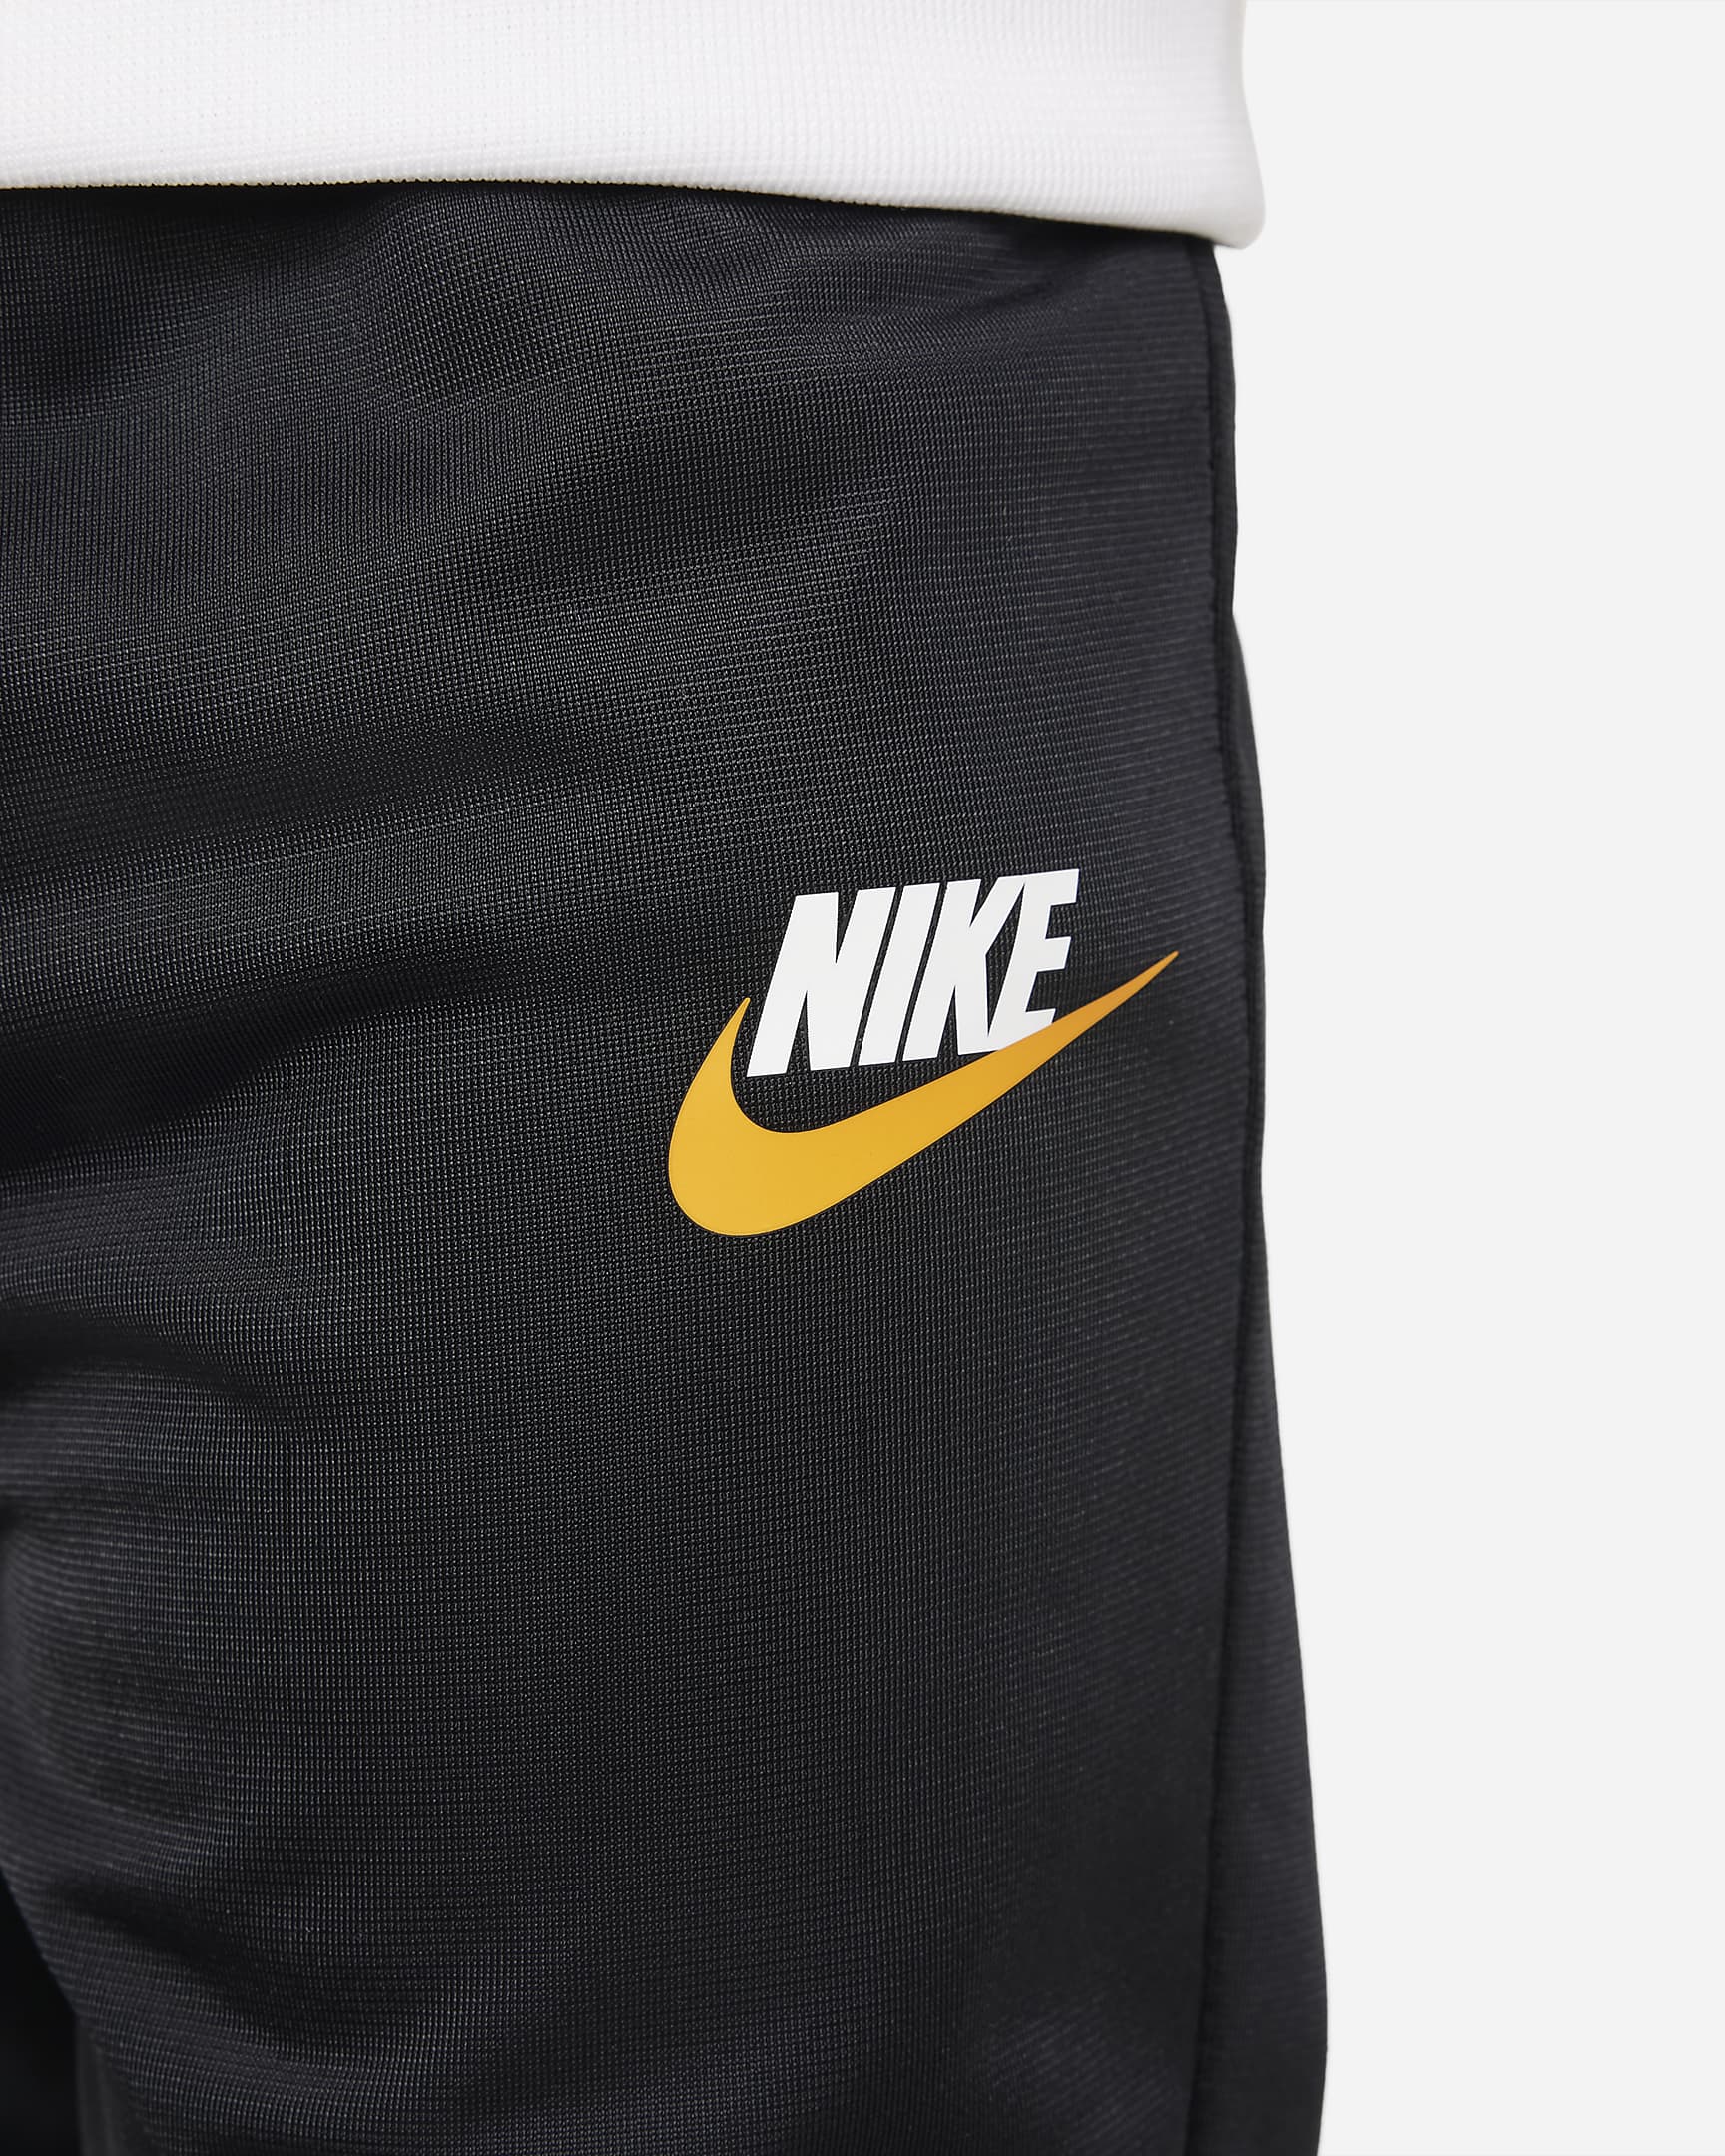 Nike Sportswear Baby (12-24M) Tracksuit Set. Nike.com